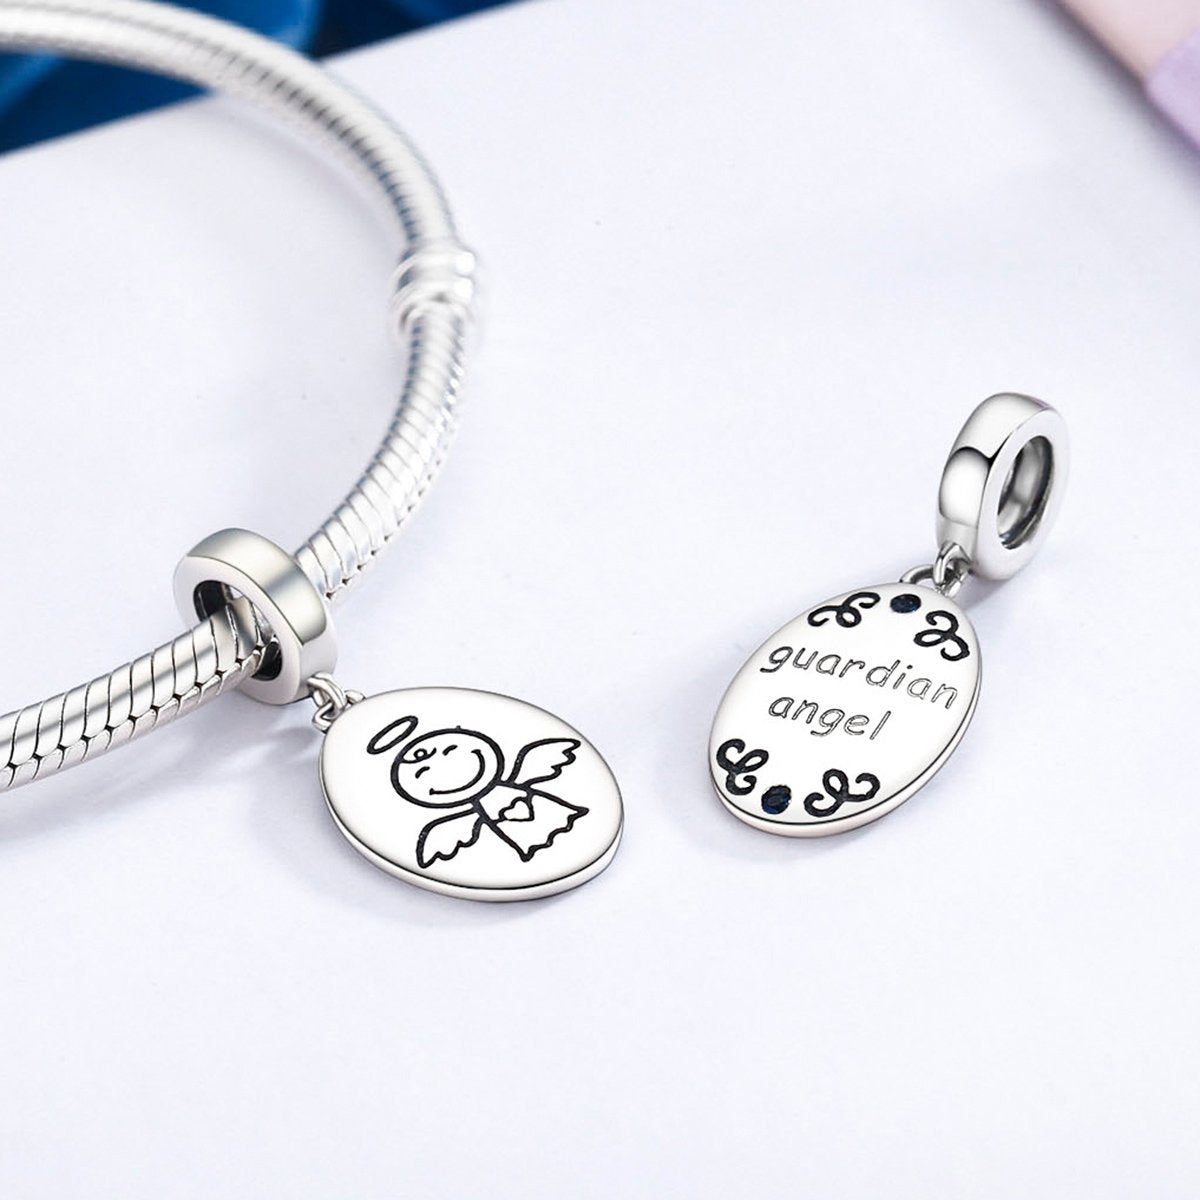 Sterling 925 silver charm the cute angel bead pendant fits Pandora charm and European charm bracelet Xaxe.com